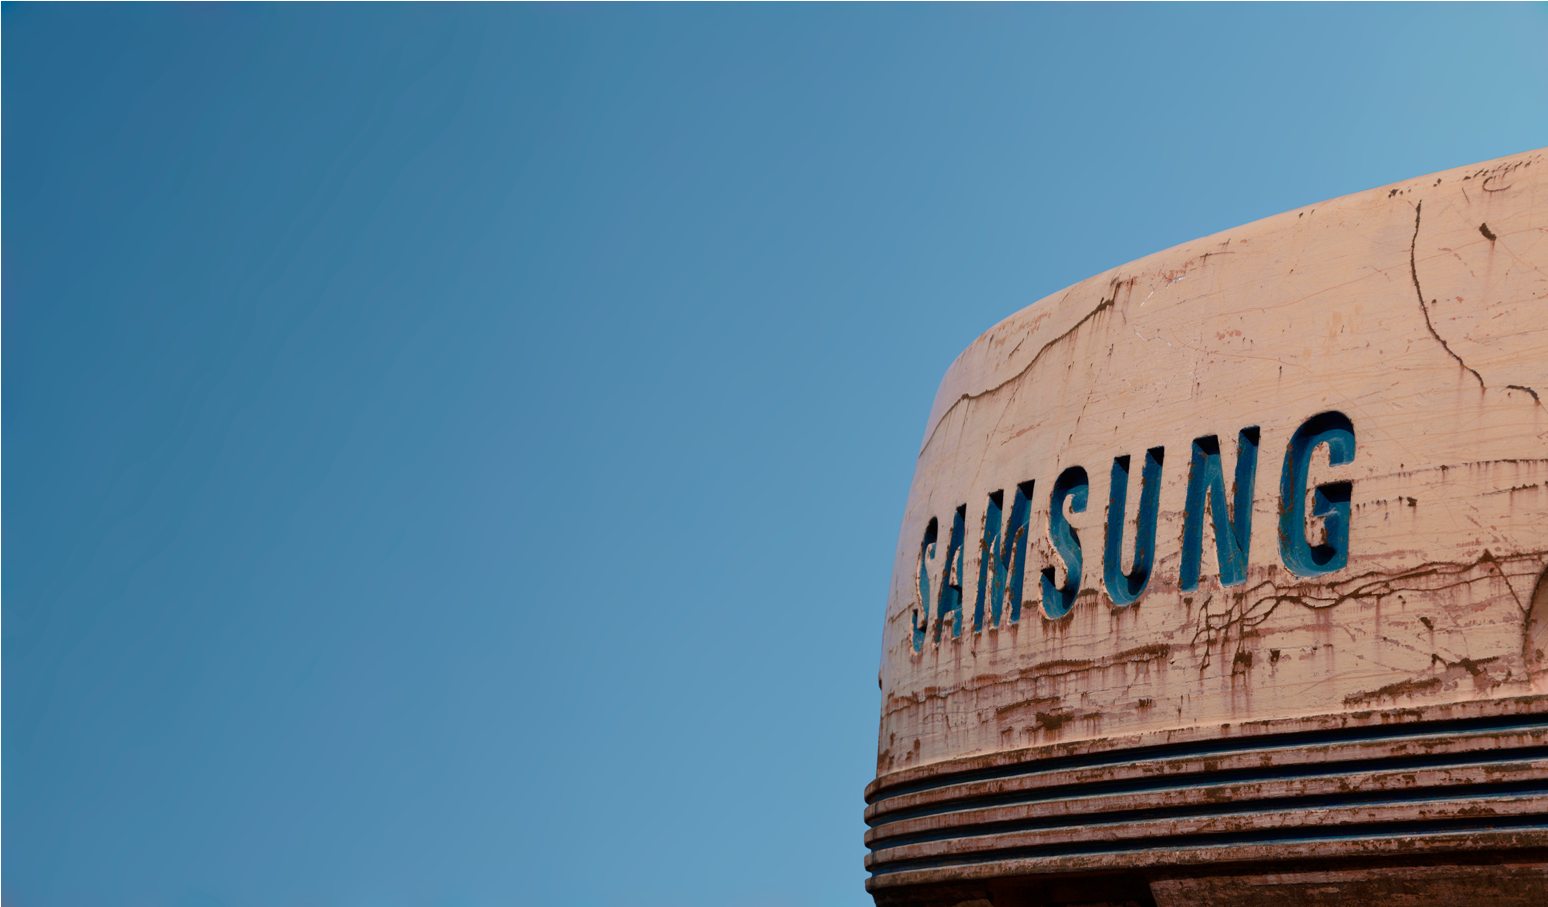 Samsung rilis Galaxy Note 20 dan Z Fold2 di tengah pandemi Covid-19. (Ilustrasi/Unsplash.com)